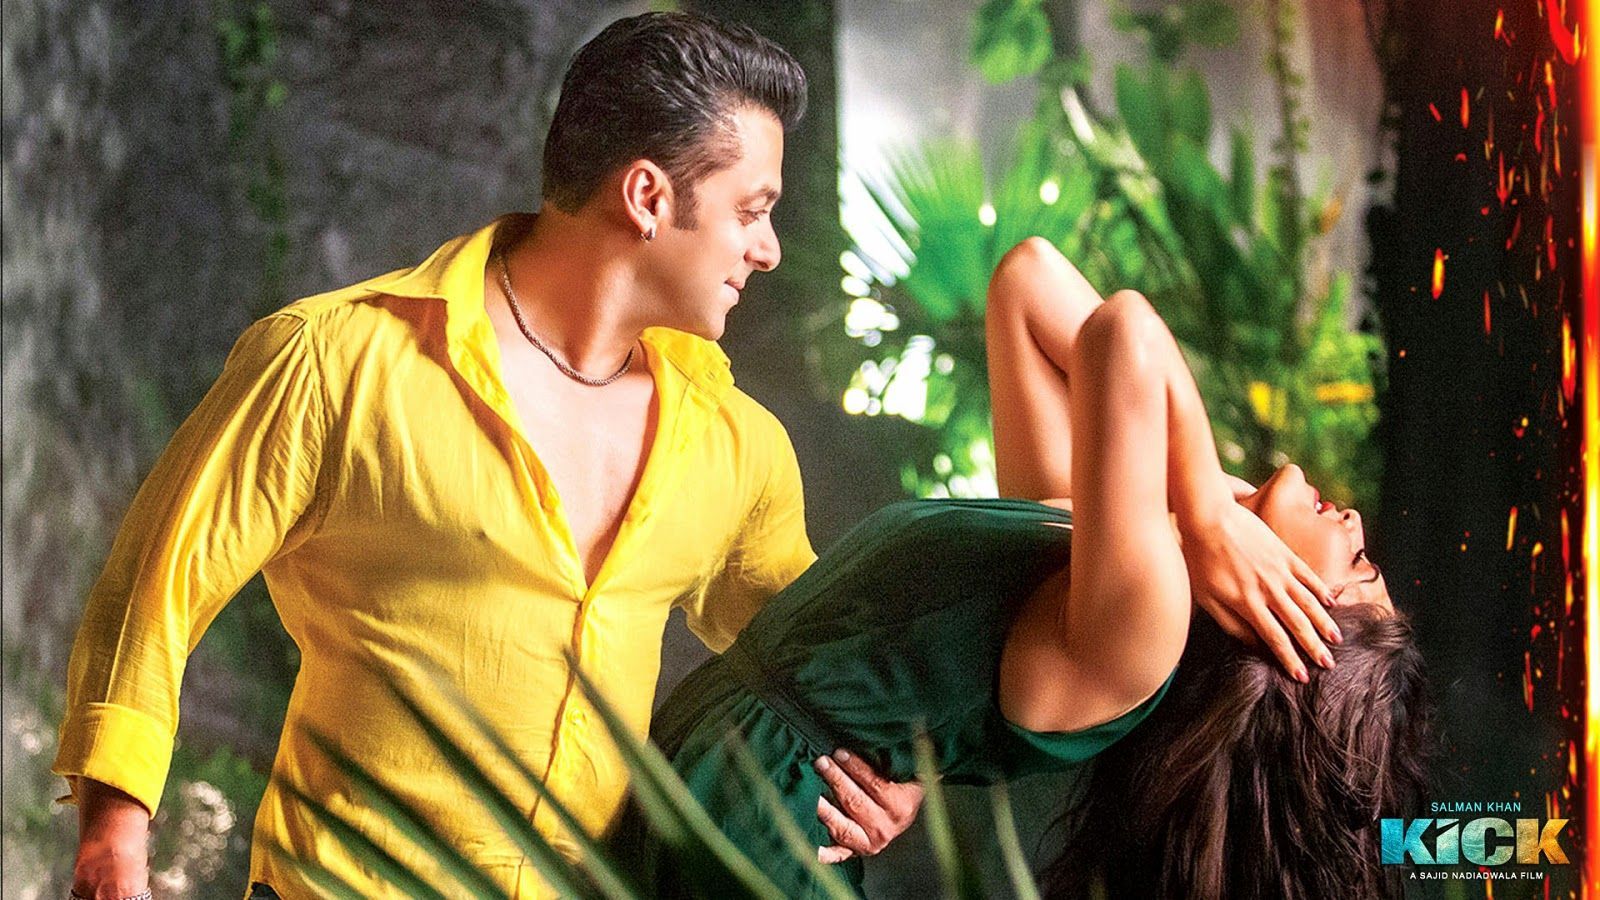 Fine Super HD Wallpaper: Kick. Salman khan, Hollywood songs, Indian movie songs